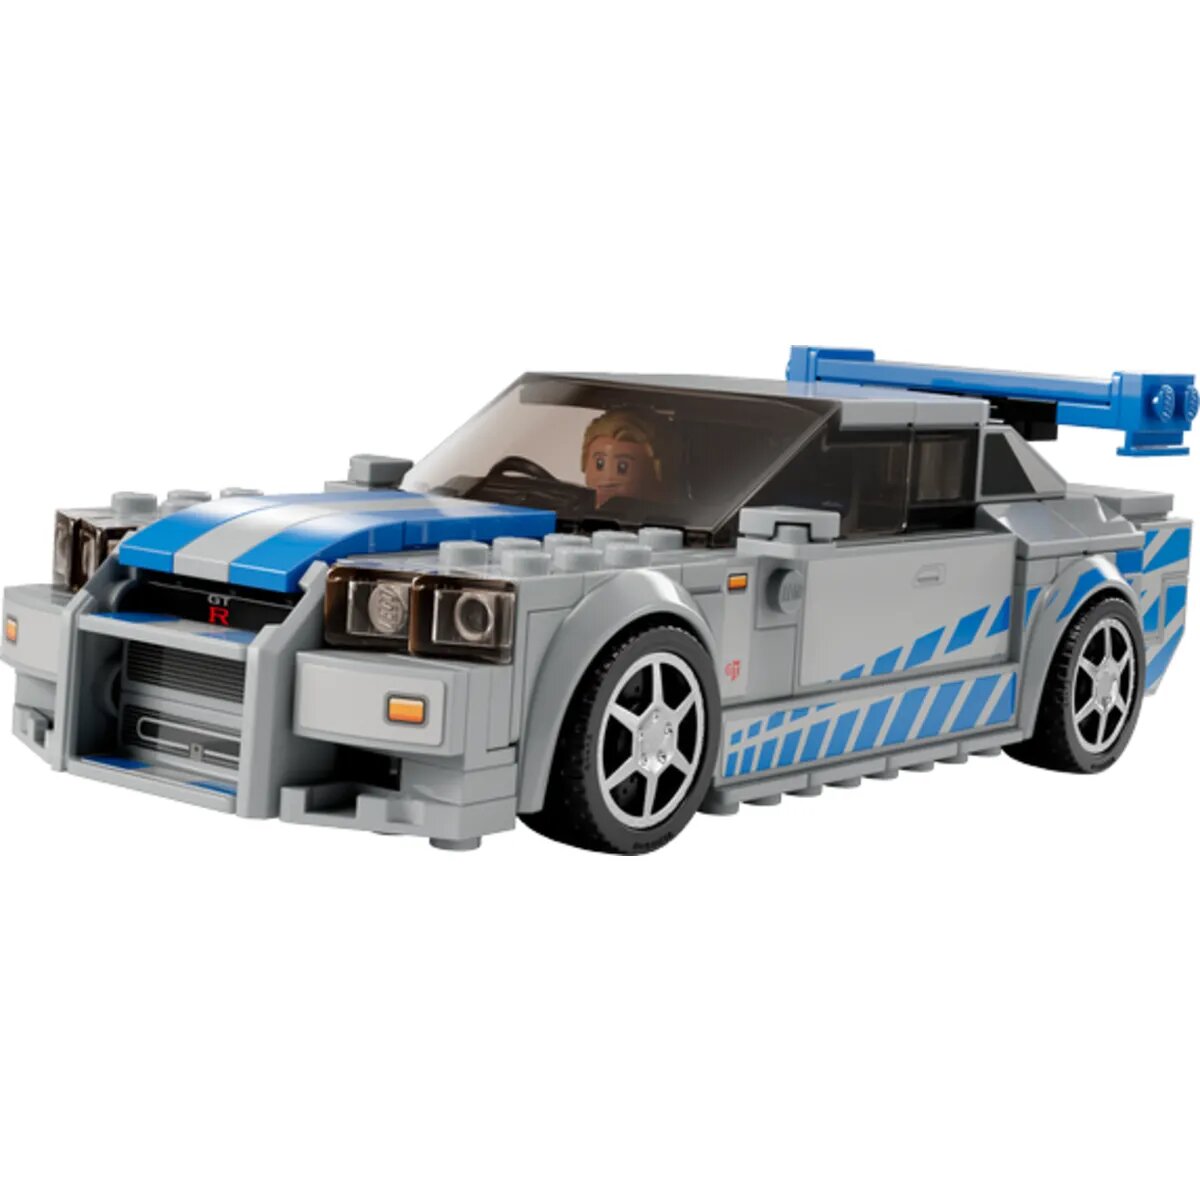 LEGO® Speed Champions 76917 2 Fast 2 Furious  Nissan Skyline GT-R (R34)